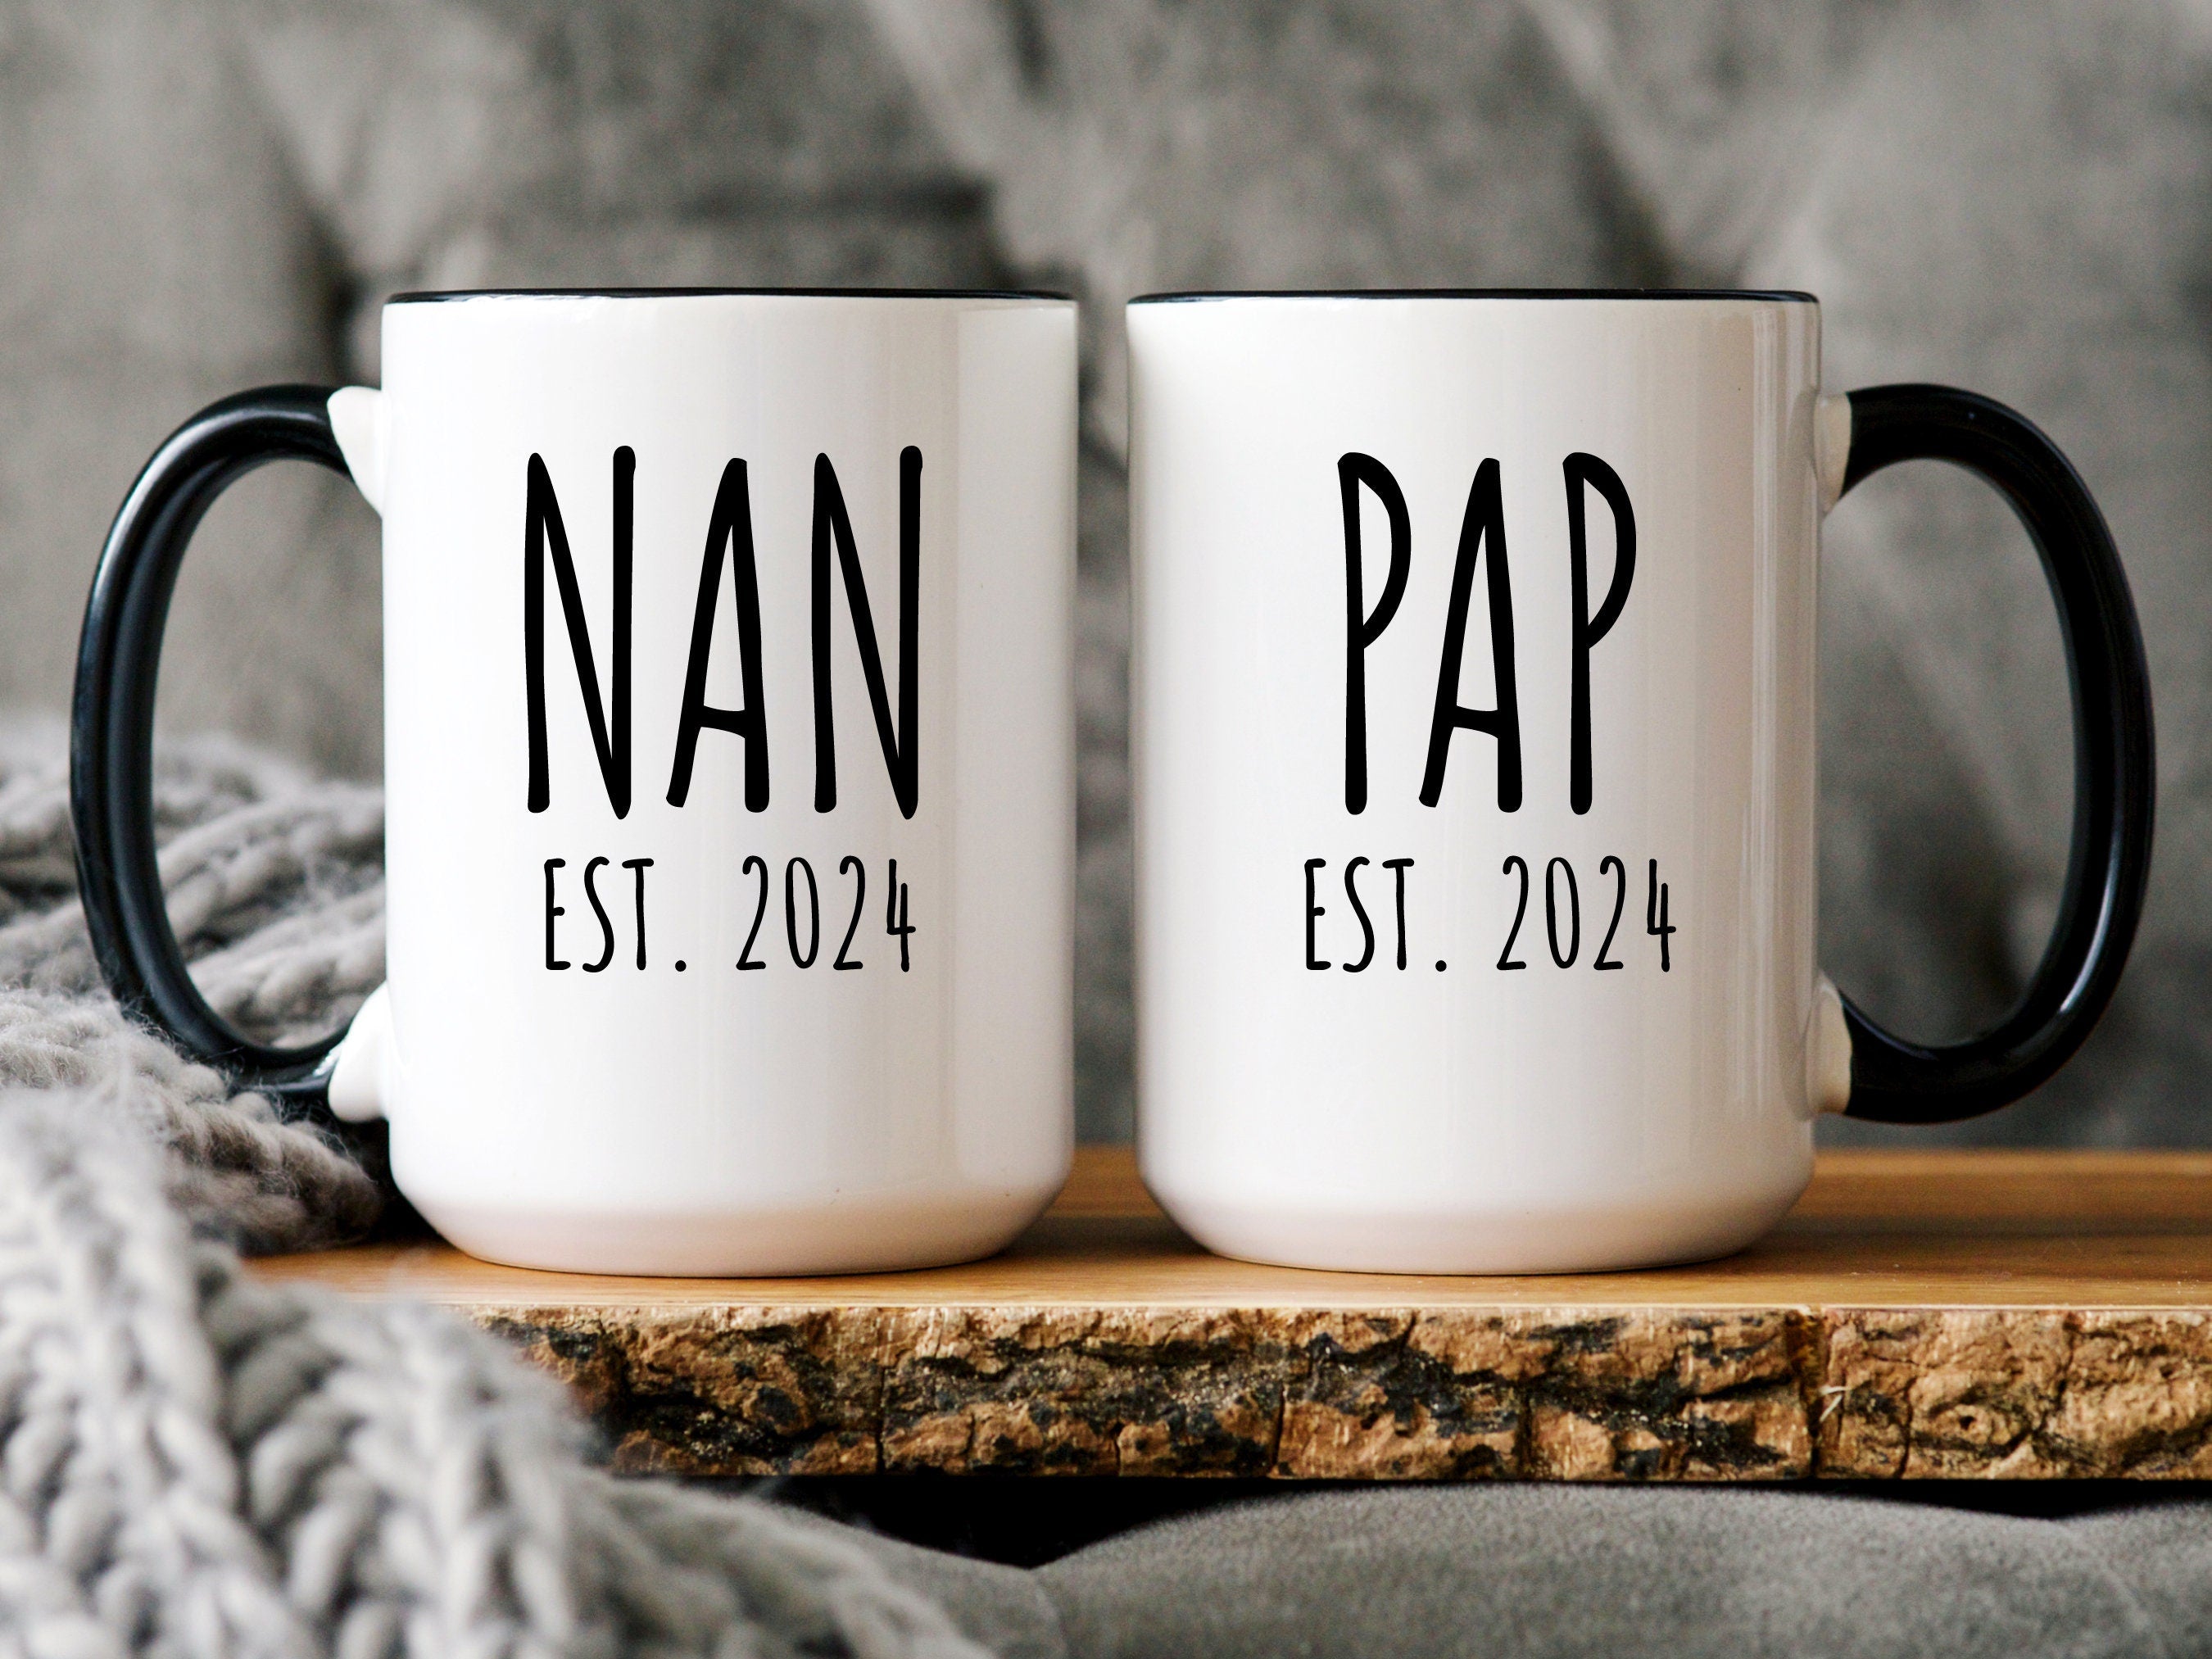 Nan and Pap Mug Set - 0